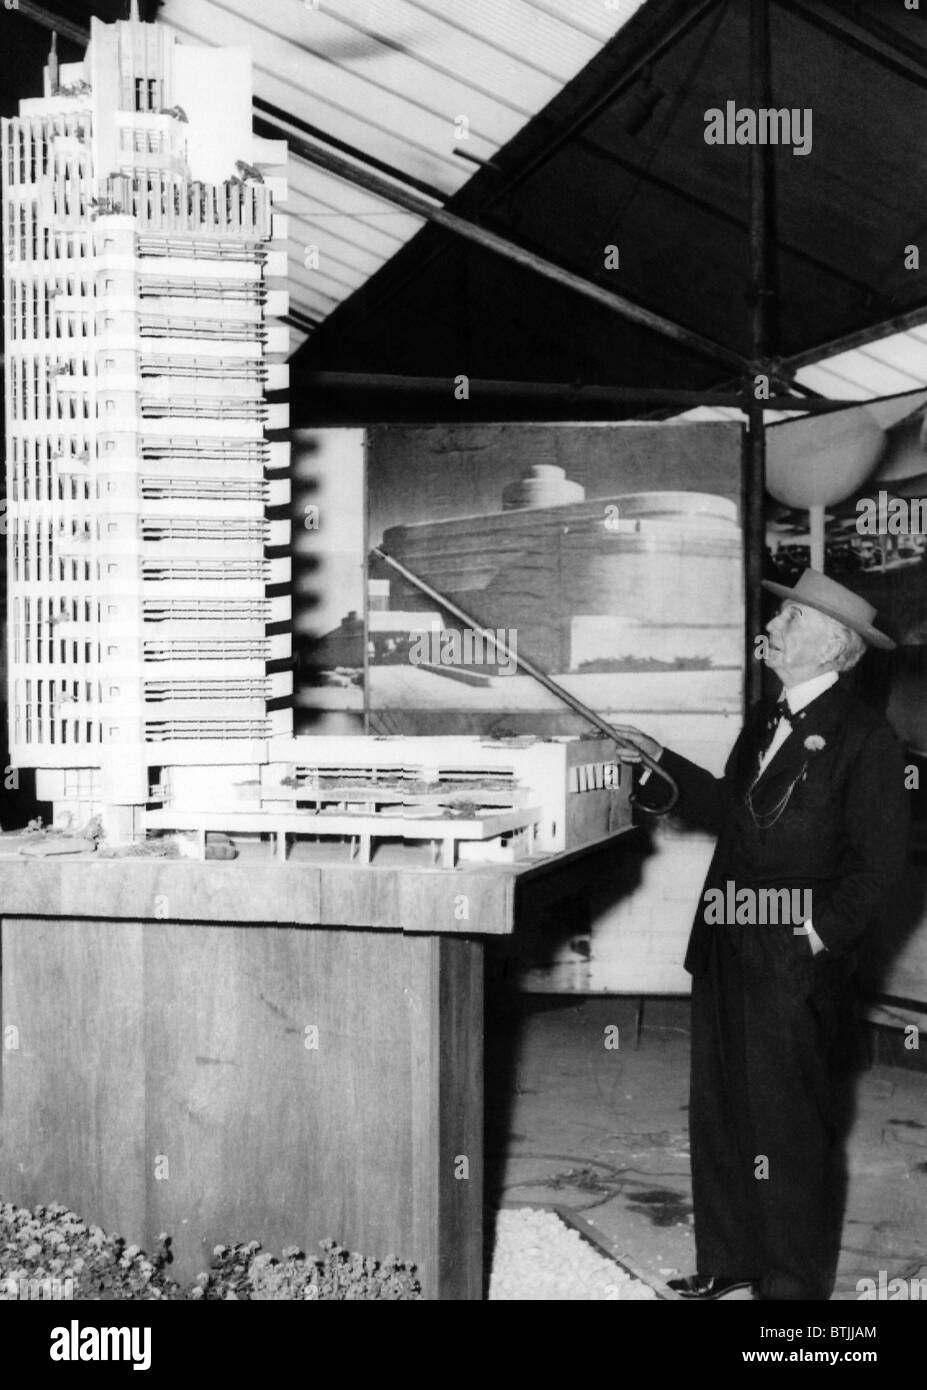 Amerikanischen Architekten Frank Lloyd Wright auf ein Modell des Turmes Preis in Oklahoma City, 1953. Stockfoto